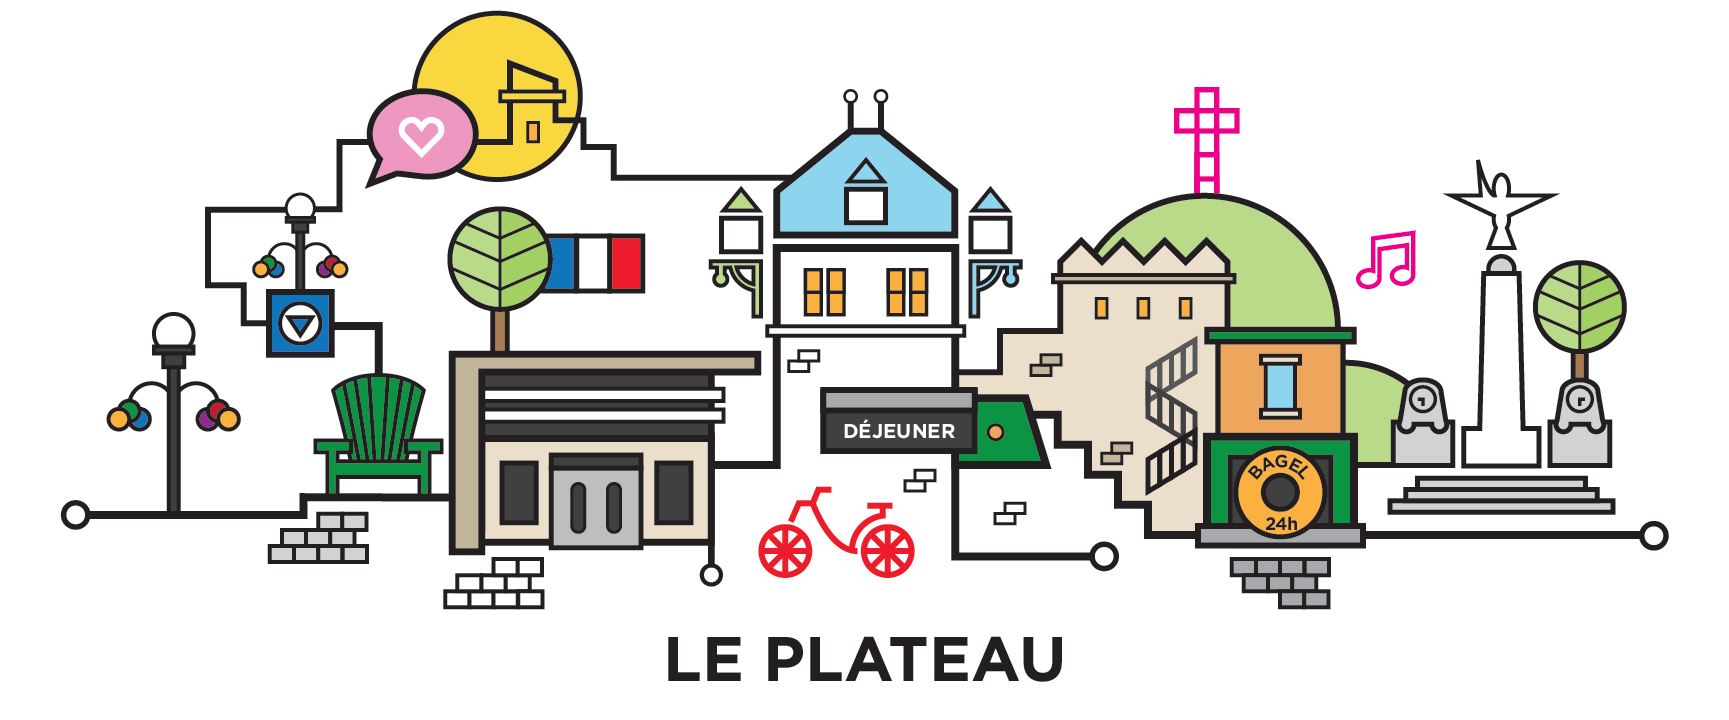 mtl-plateau-cityline-illustration-by-loogart